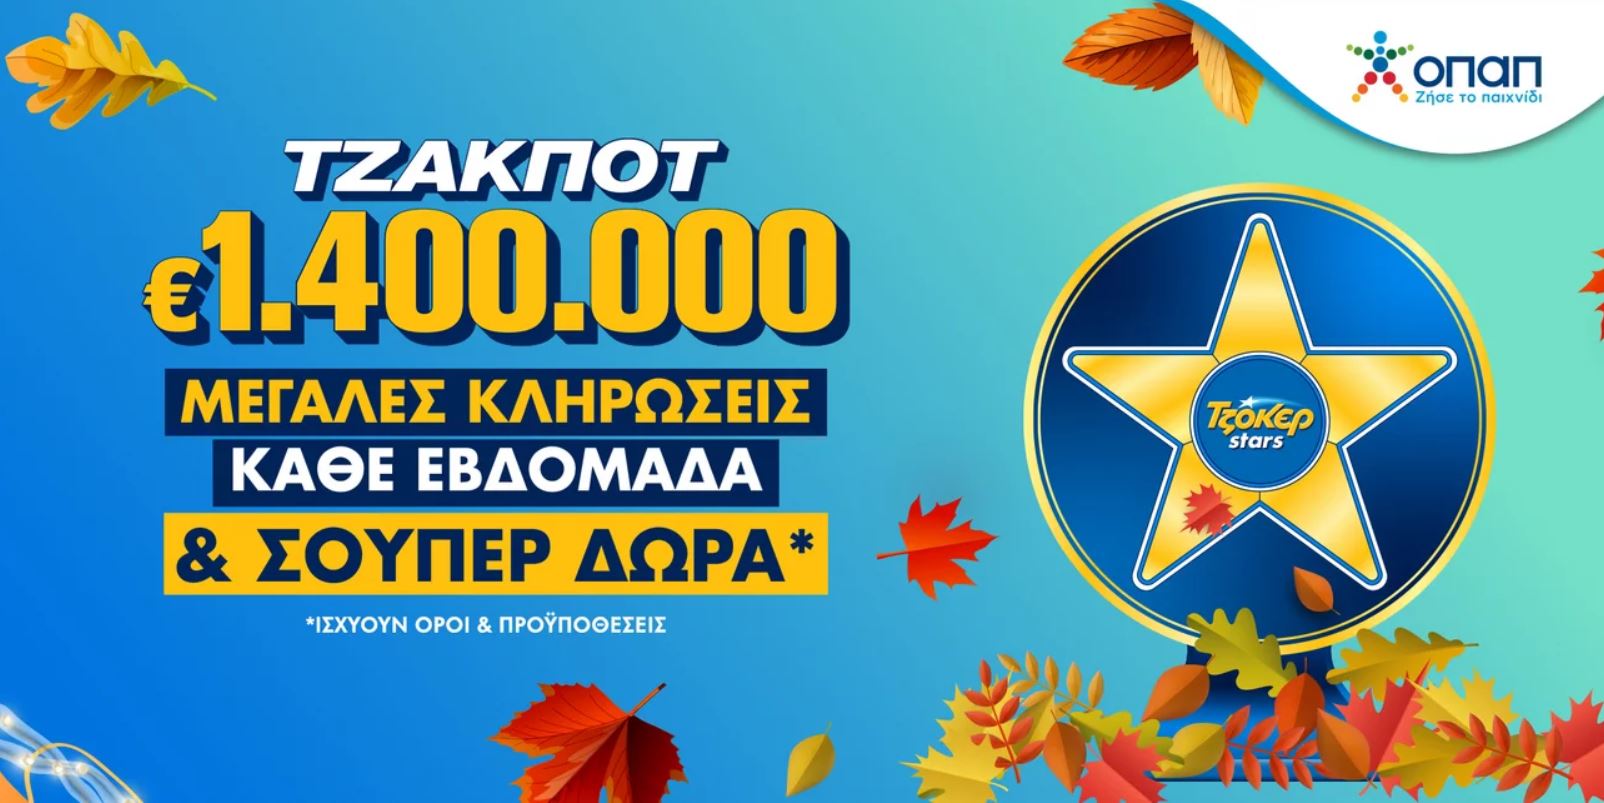 Tzoker.gr: Μεγάλα δώρα για τους παίχτες -ONLINE ΤΖΟΚΕΡ - ΔΕΣ ΠΩΣ ΘΑ ΚΕΡΔΙΣΕΙΣ !!!